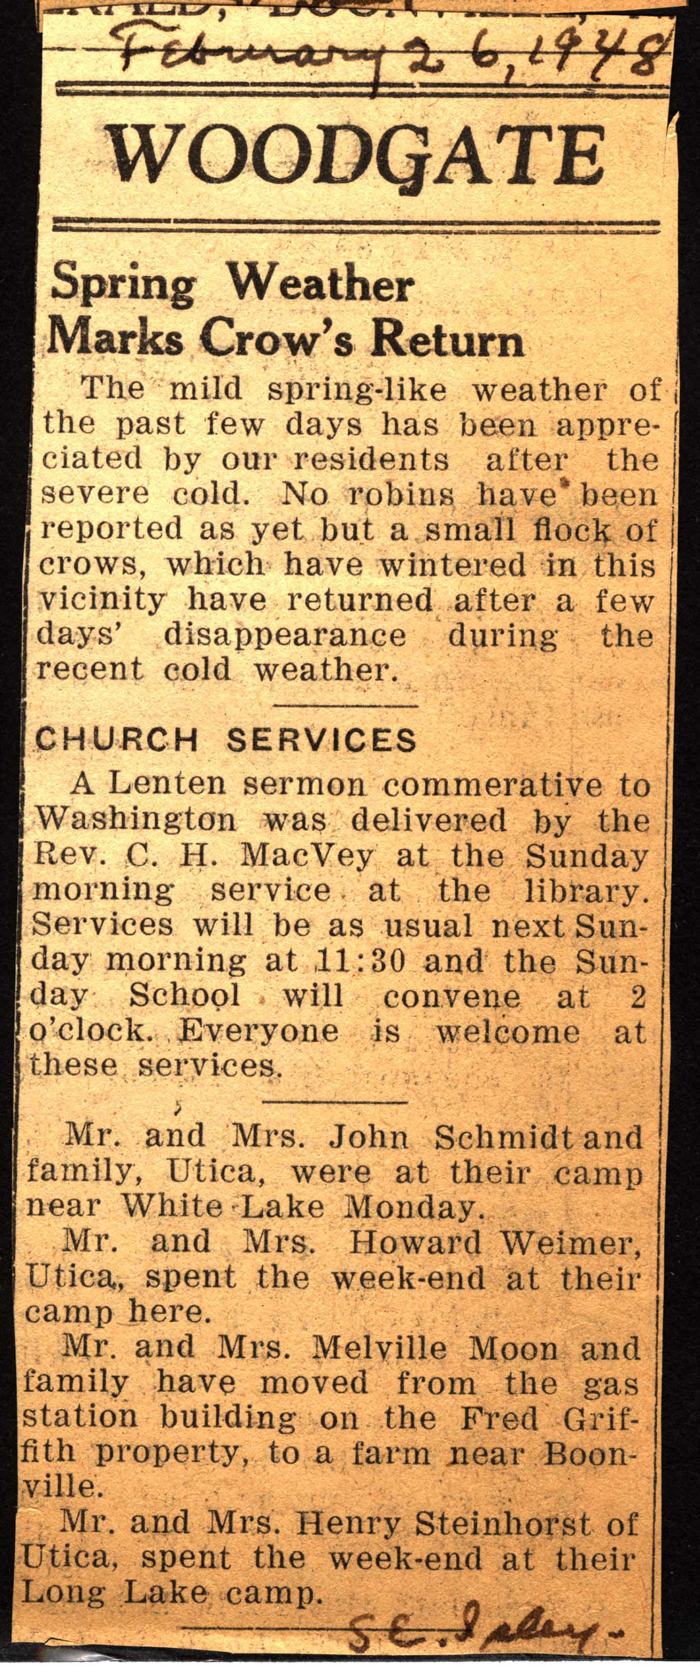 woodgate news february 26 1948